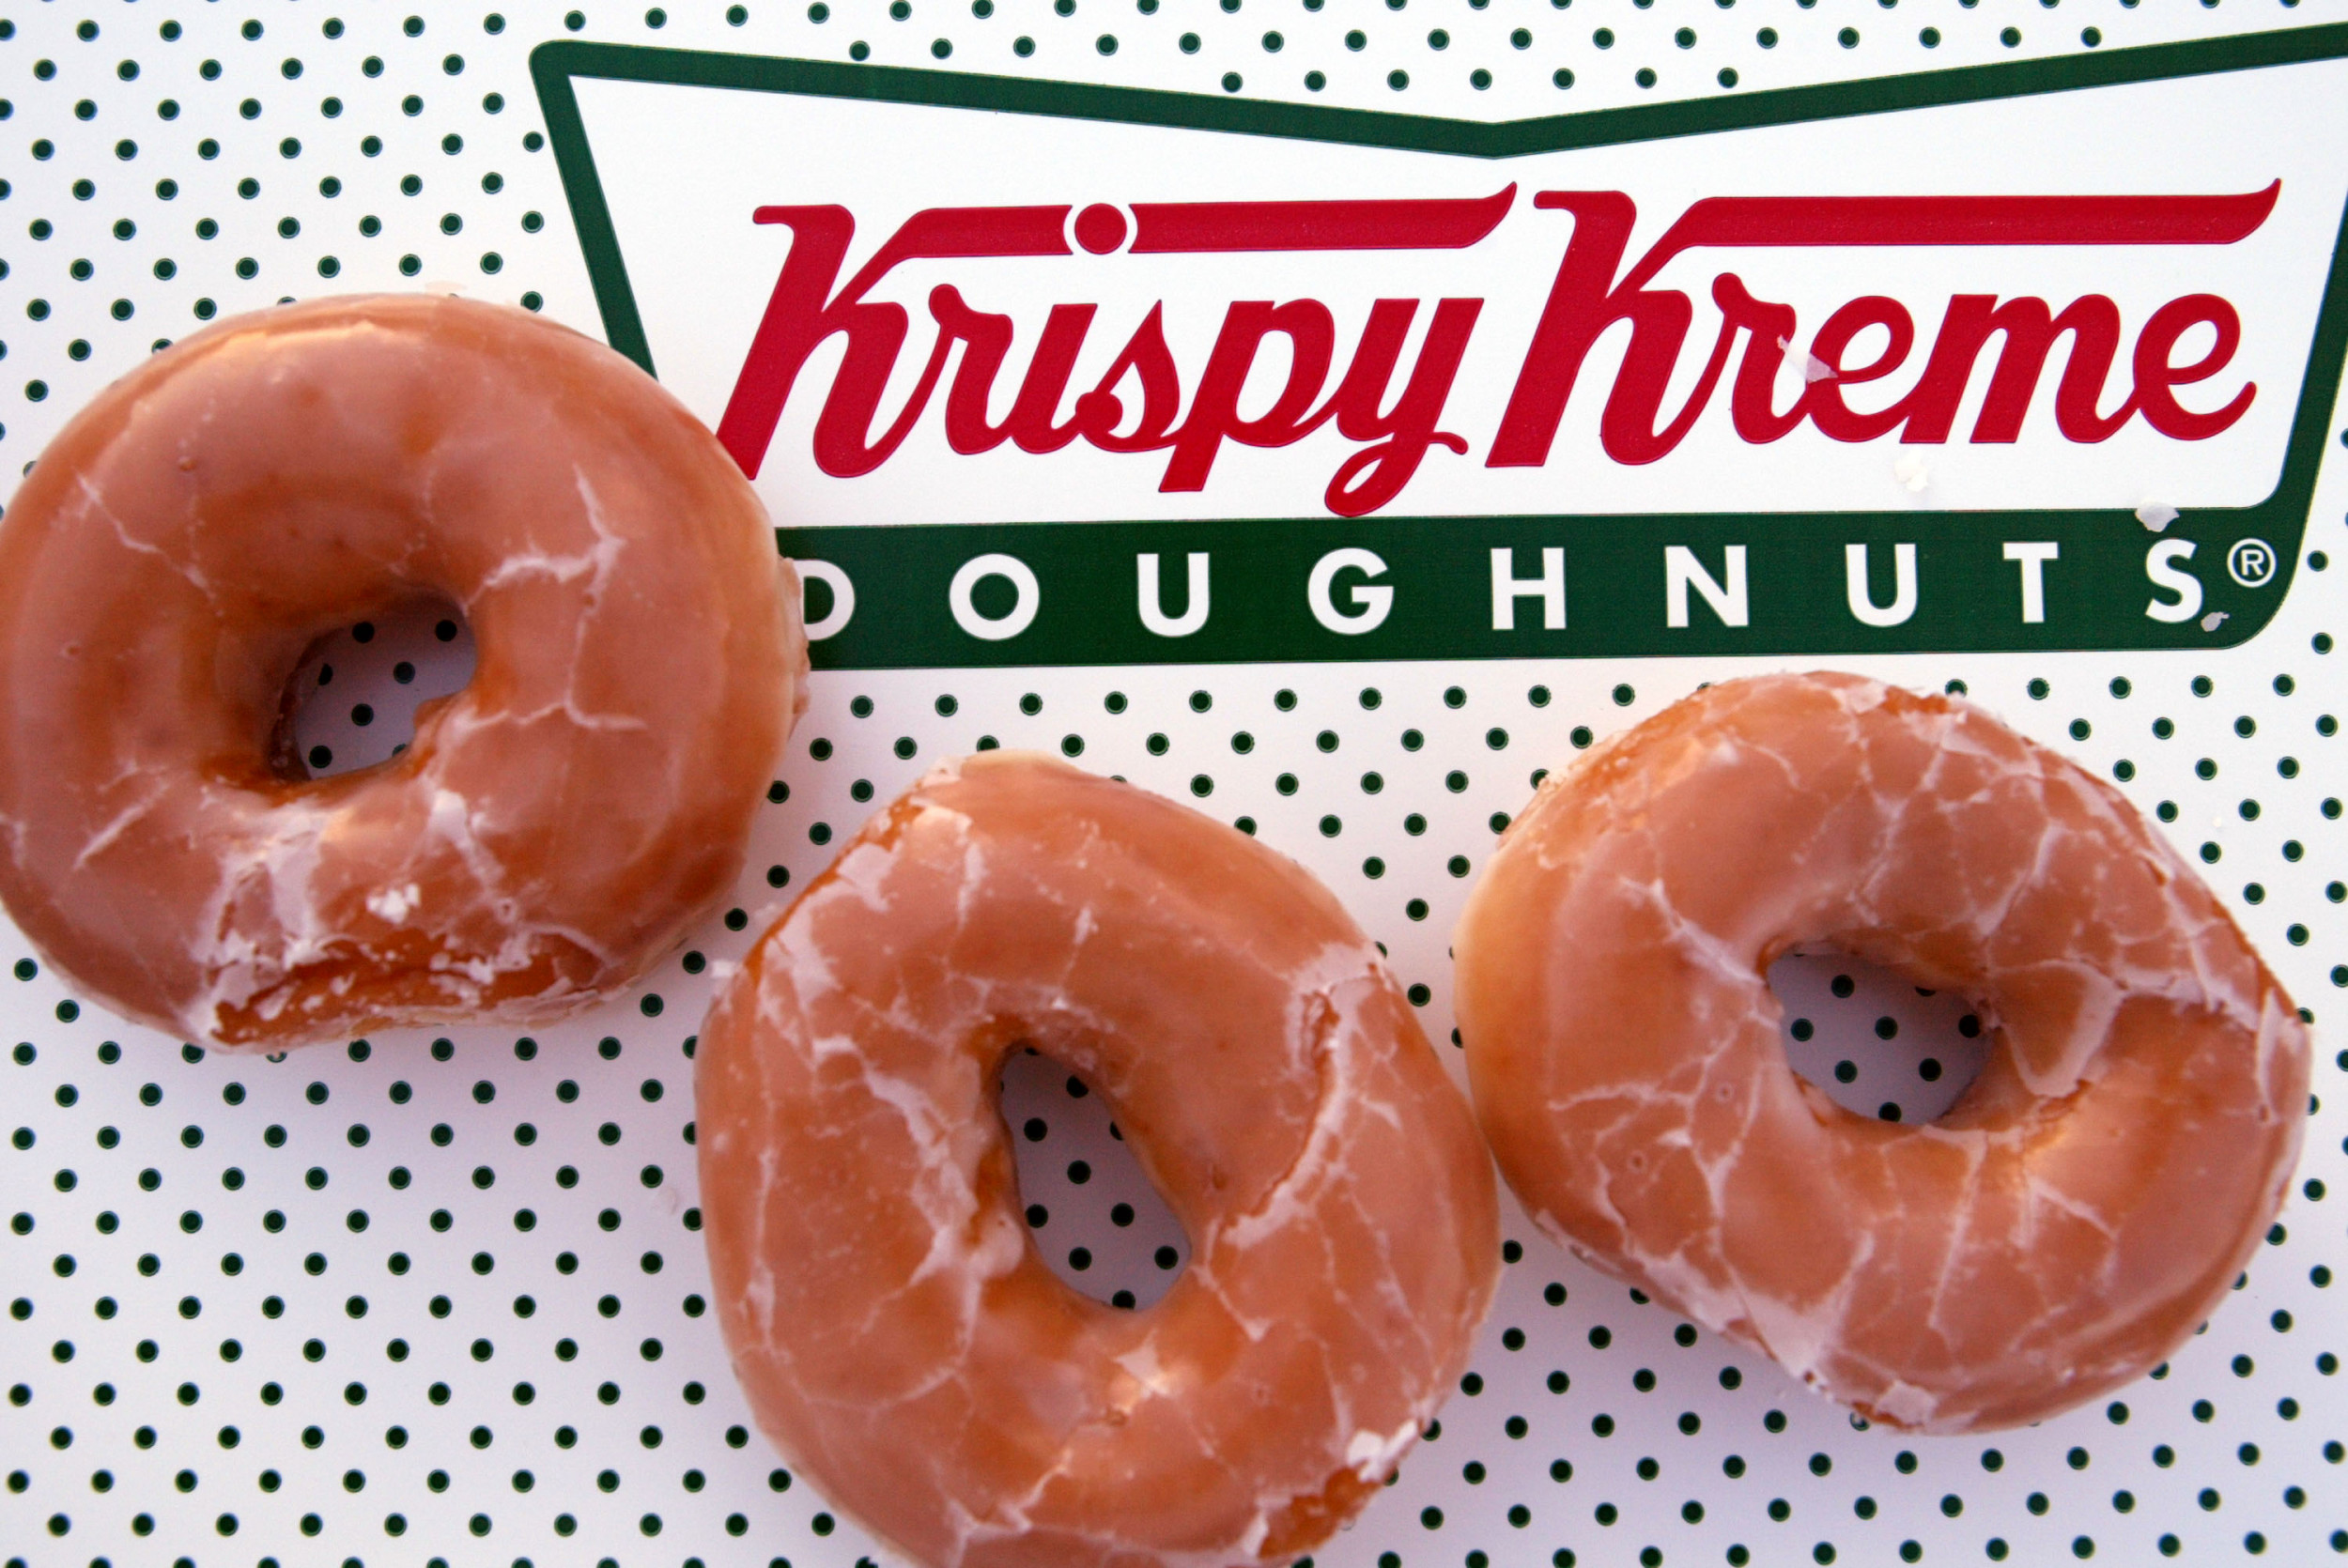 Krispy Kreme Day Of Dozens How To Get A Dozen Original Glazed Doughnuts For 1 Today